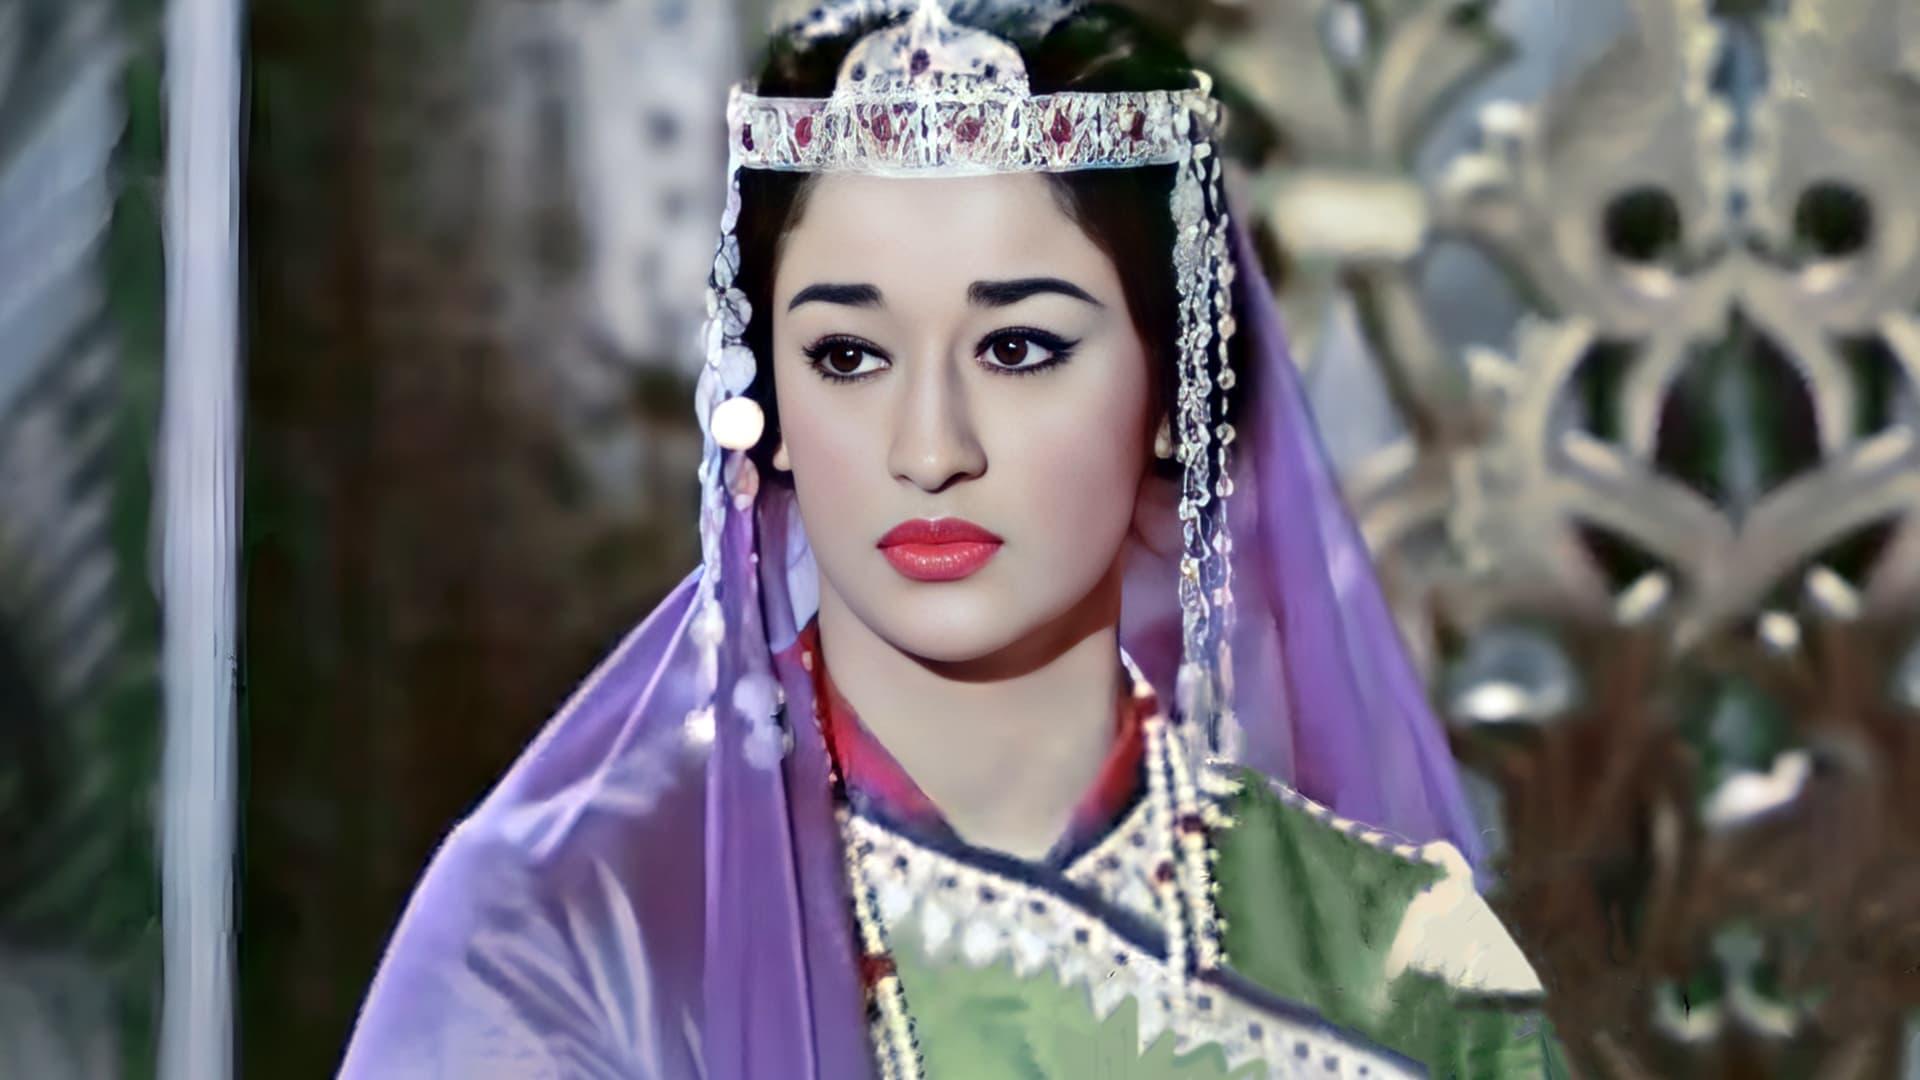 Princess Of Arabia backdrop